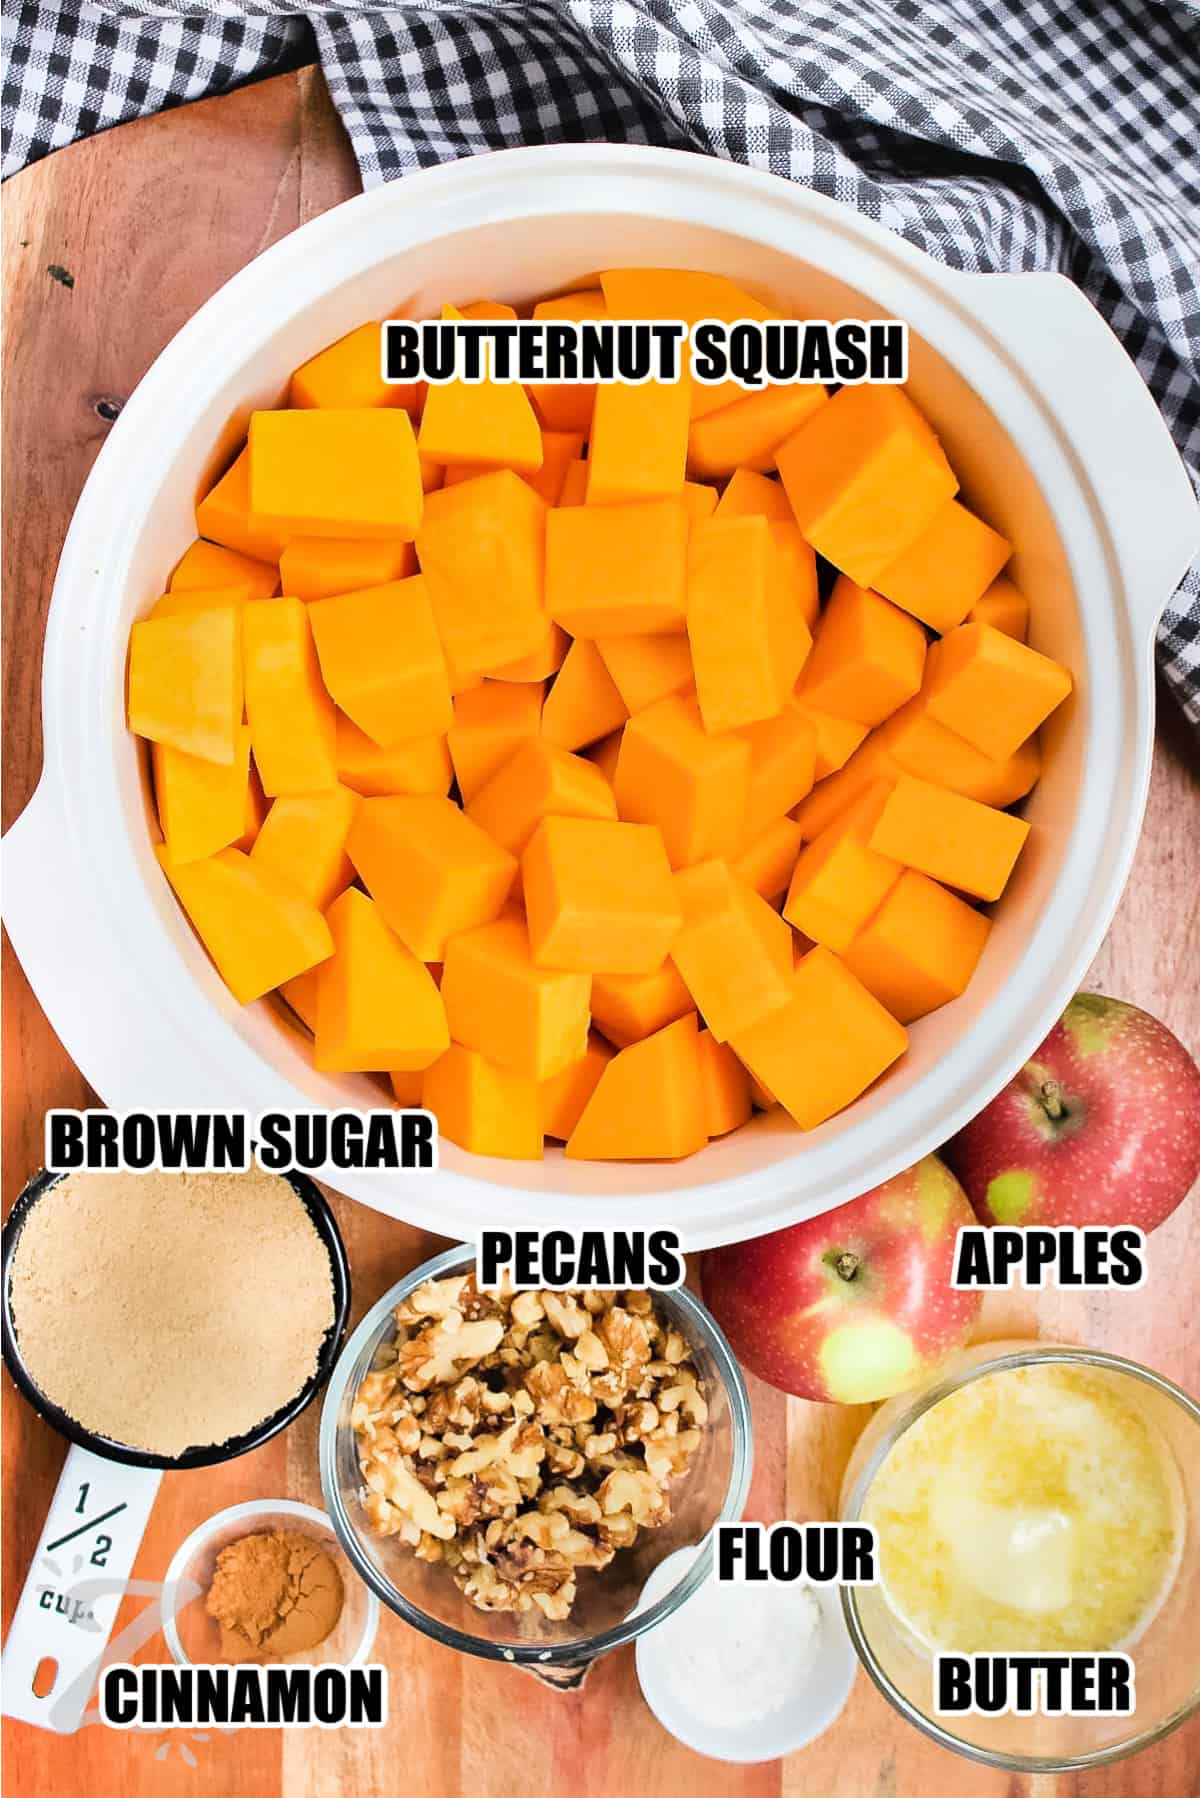 butternut squash casserole ingredients including butternut squash, apples, brown sugar, pecans, butter, flour, and cinnamon